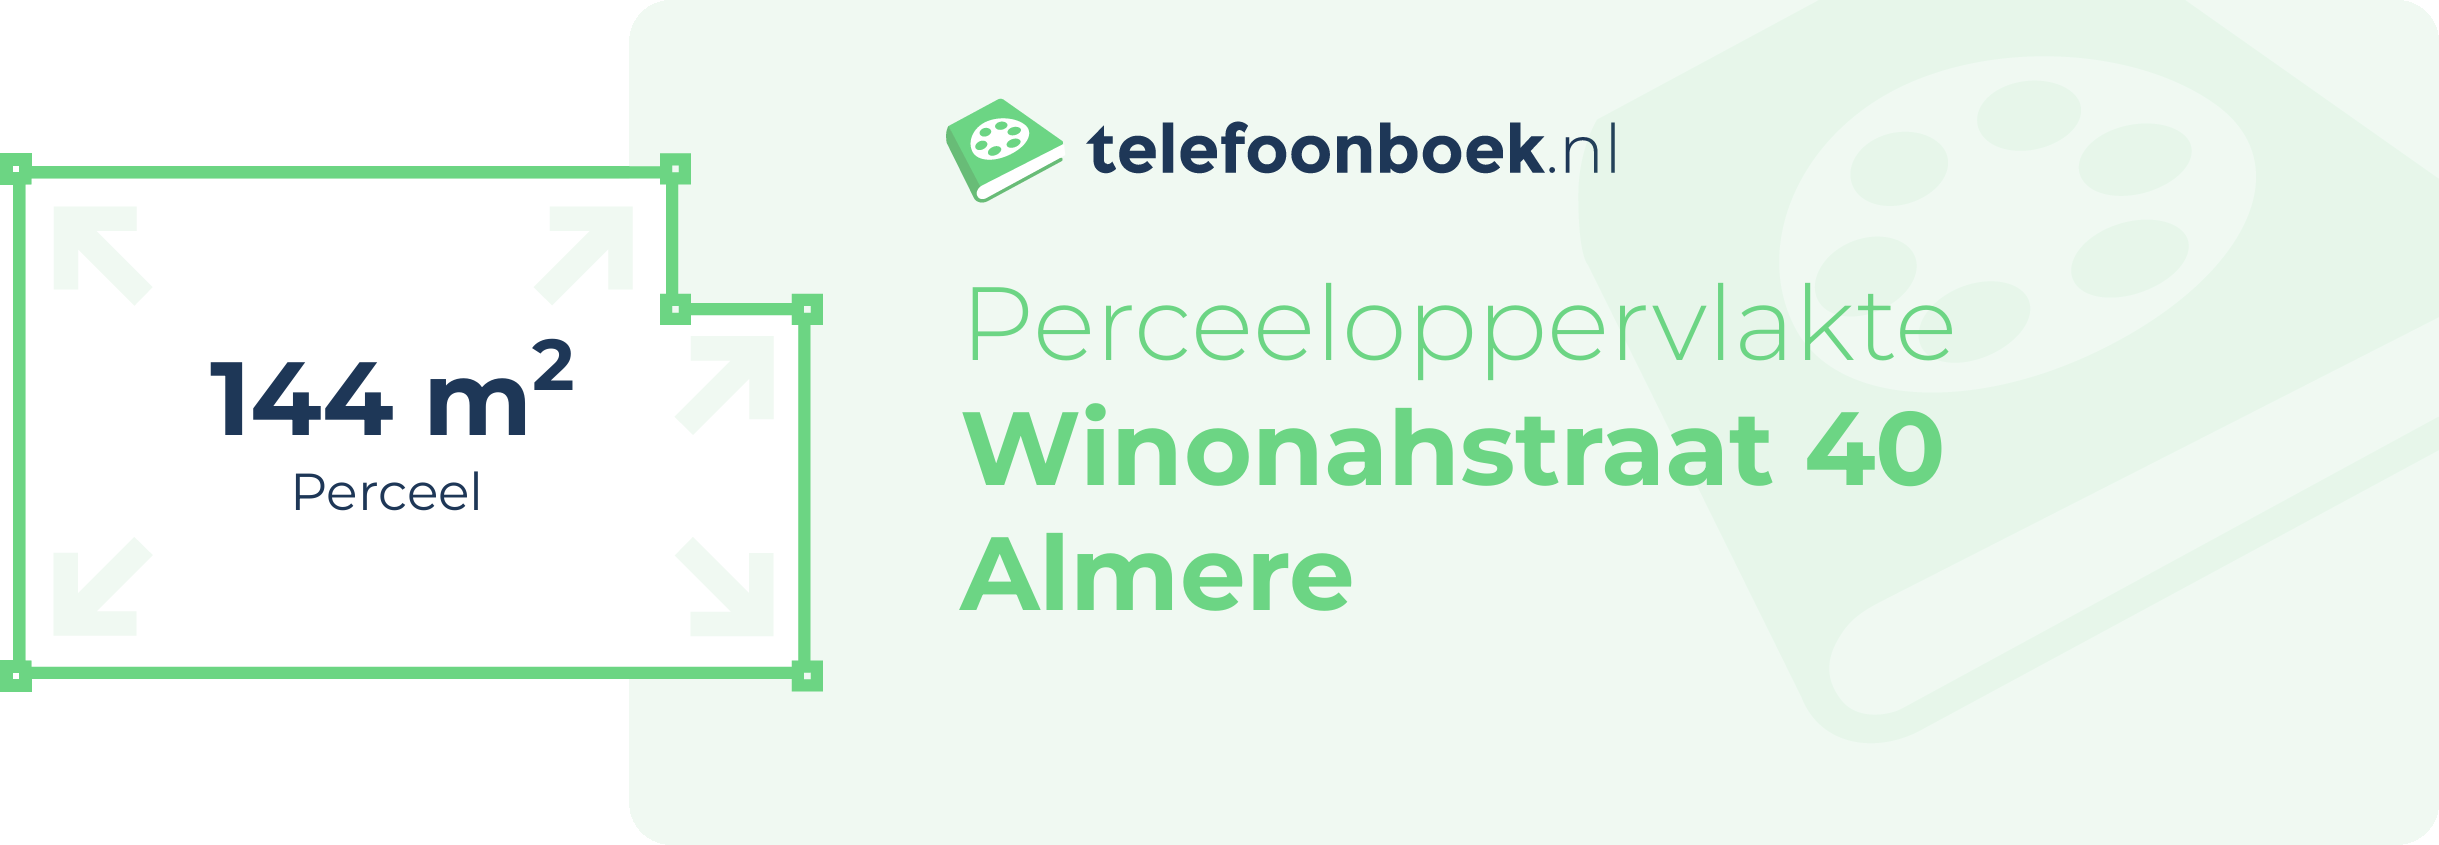 Perceeloppervlakte Winonahstraat 40 Almere